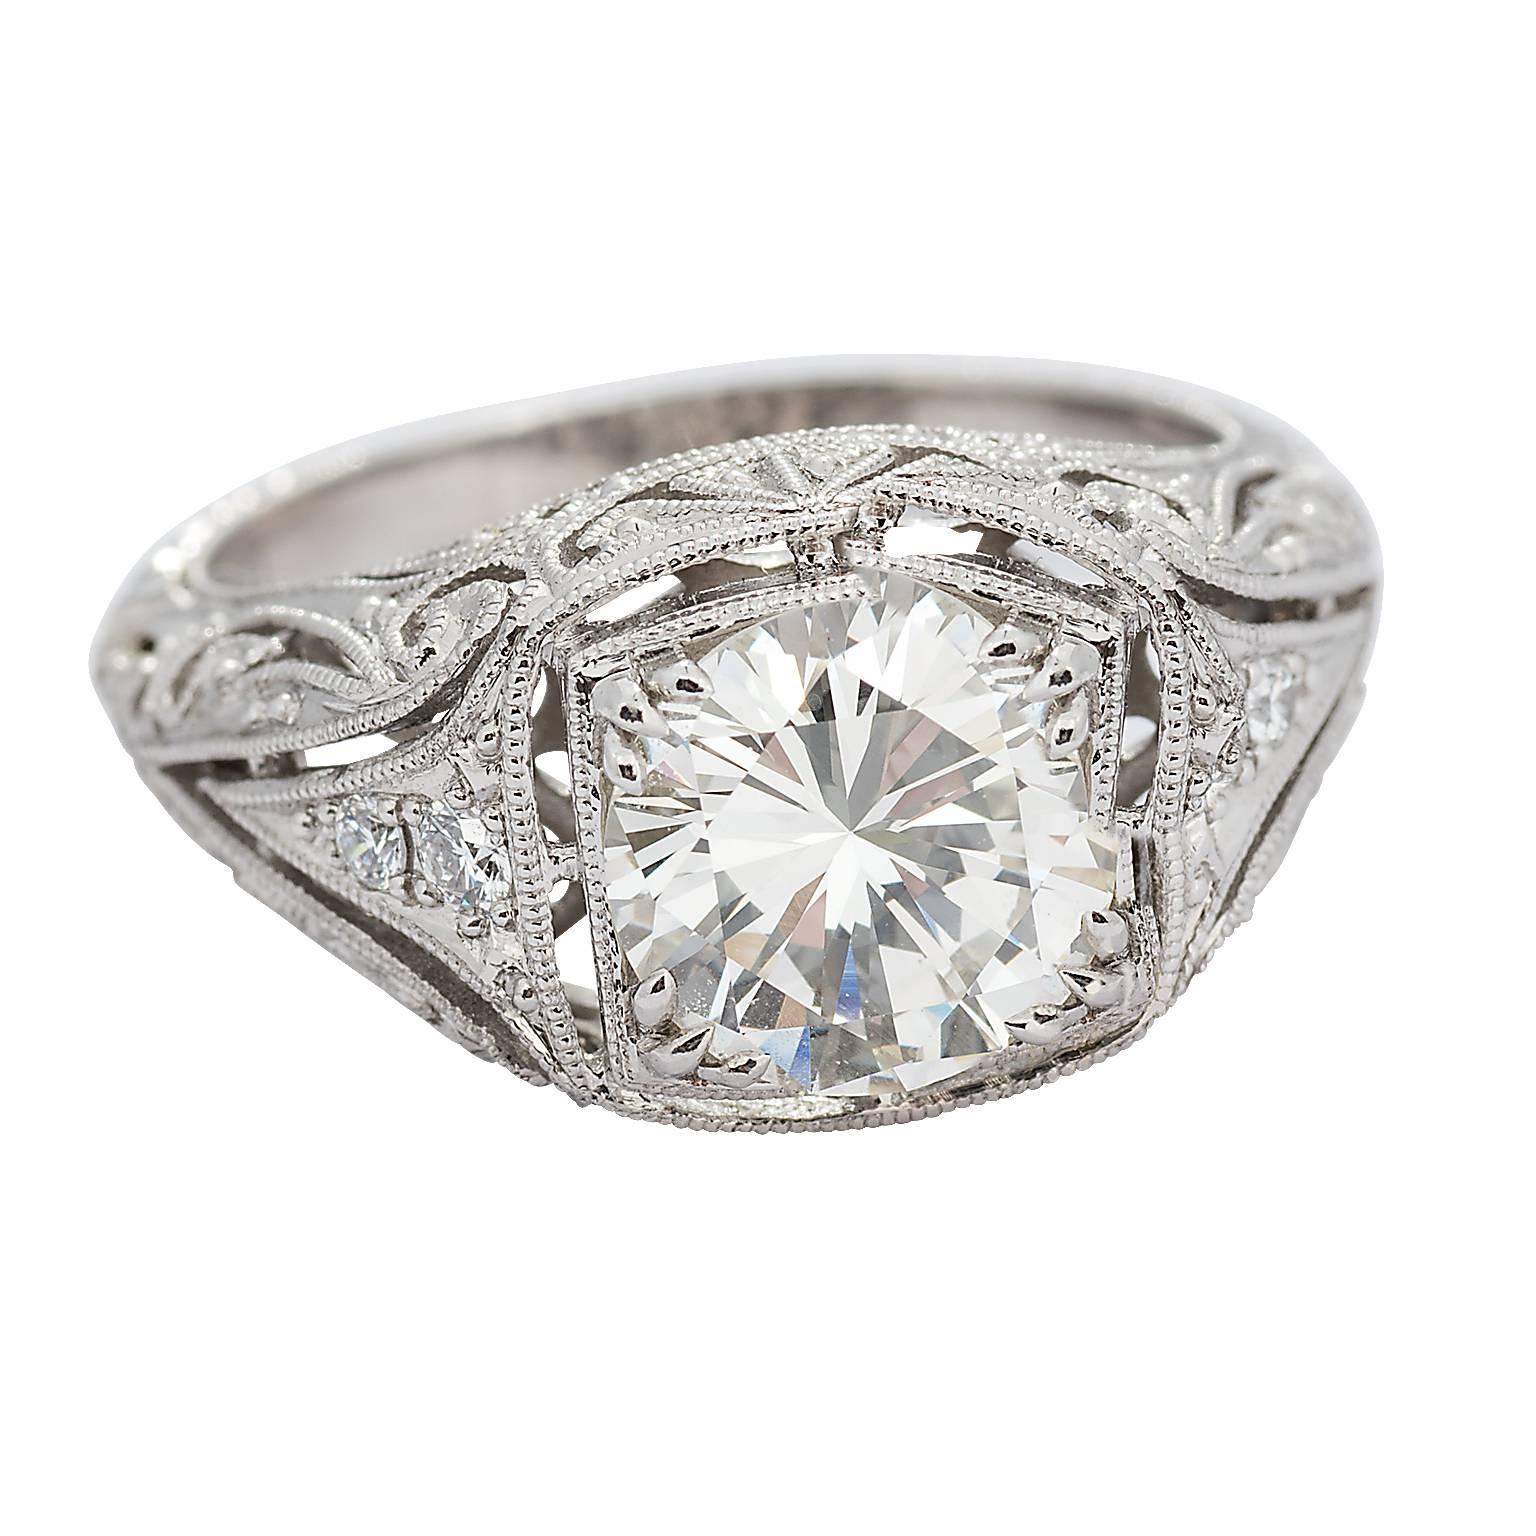  1.99 Carat Round Transitional Cut Diamond Platinum Ring